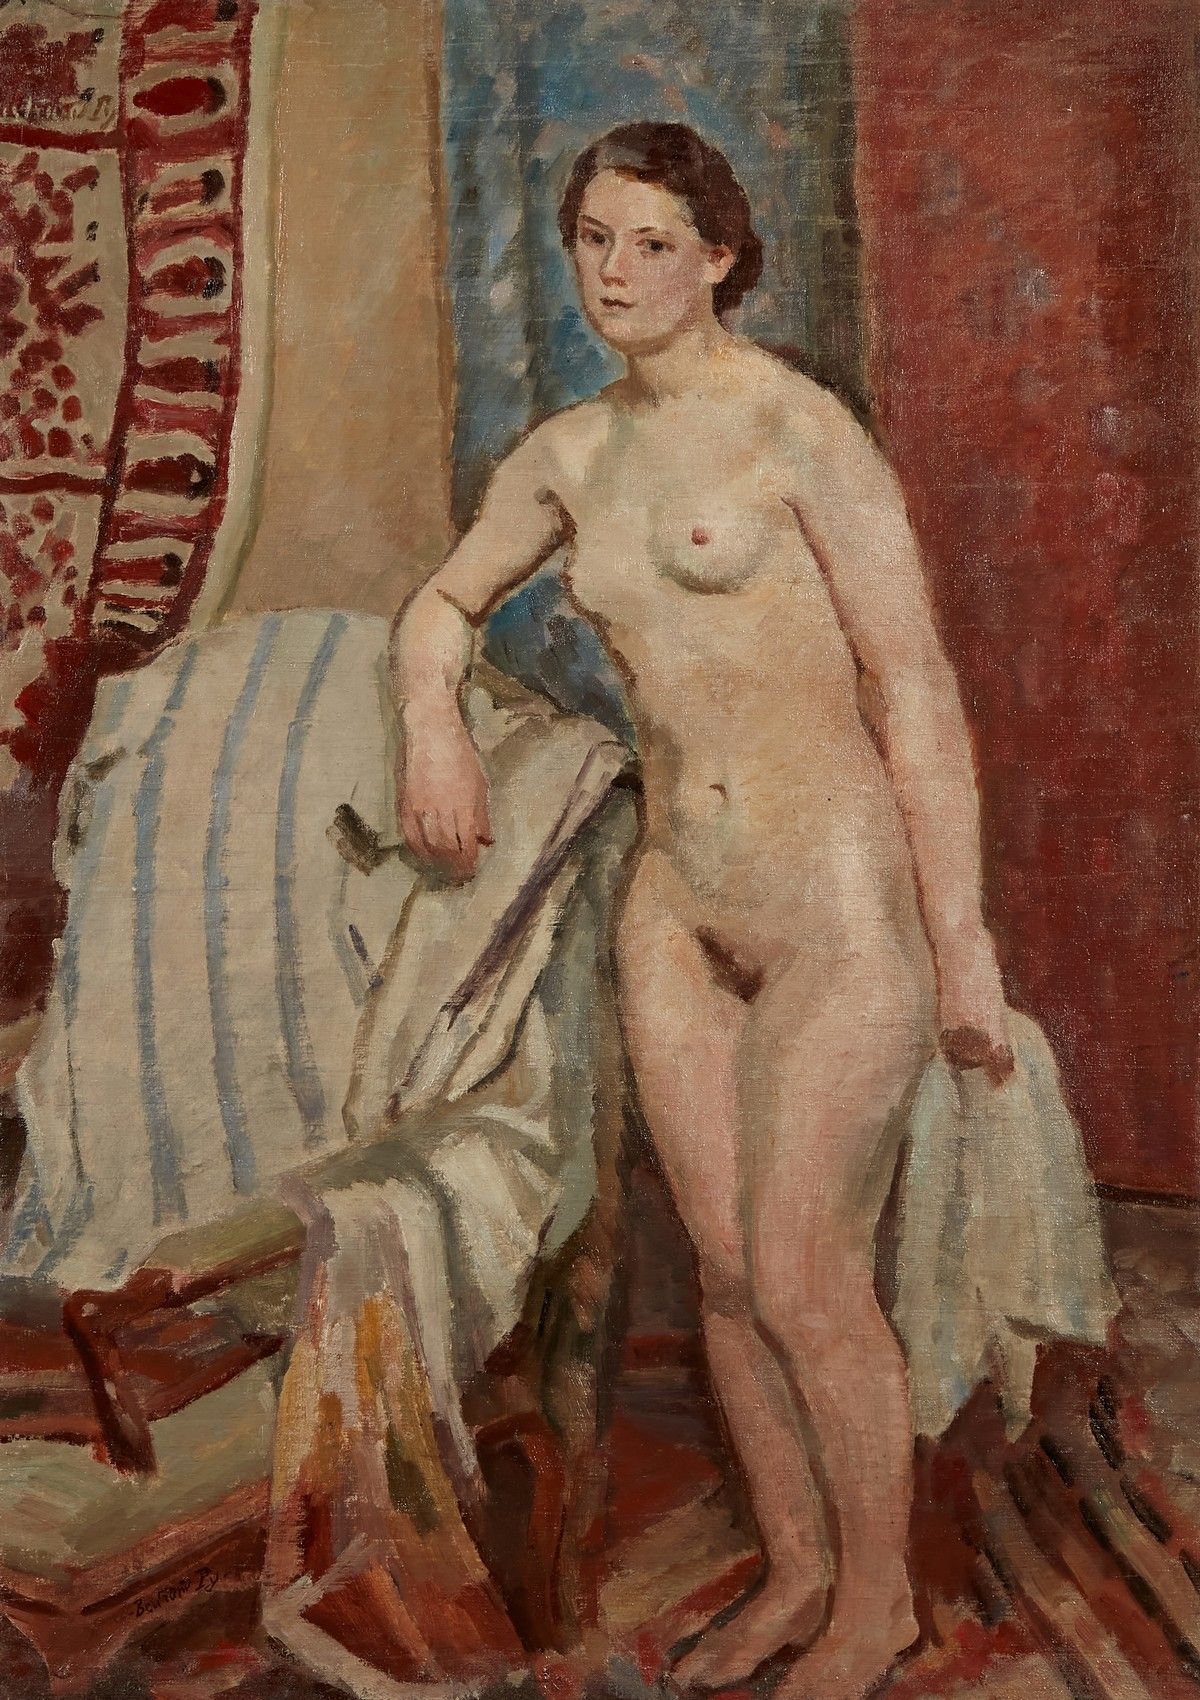 Bertrand py 伯特兰-PY（1895-1973年）

手持白毛巾的裸体站立者

布面油画，左下角有签名

92 x 65 cm